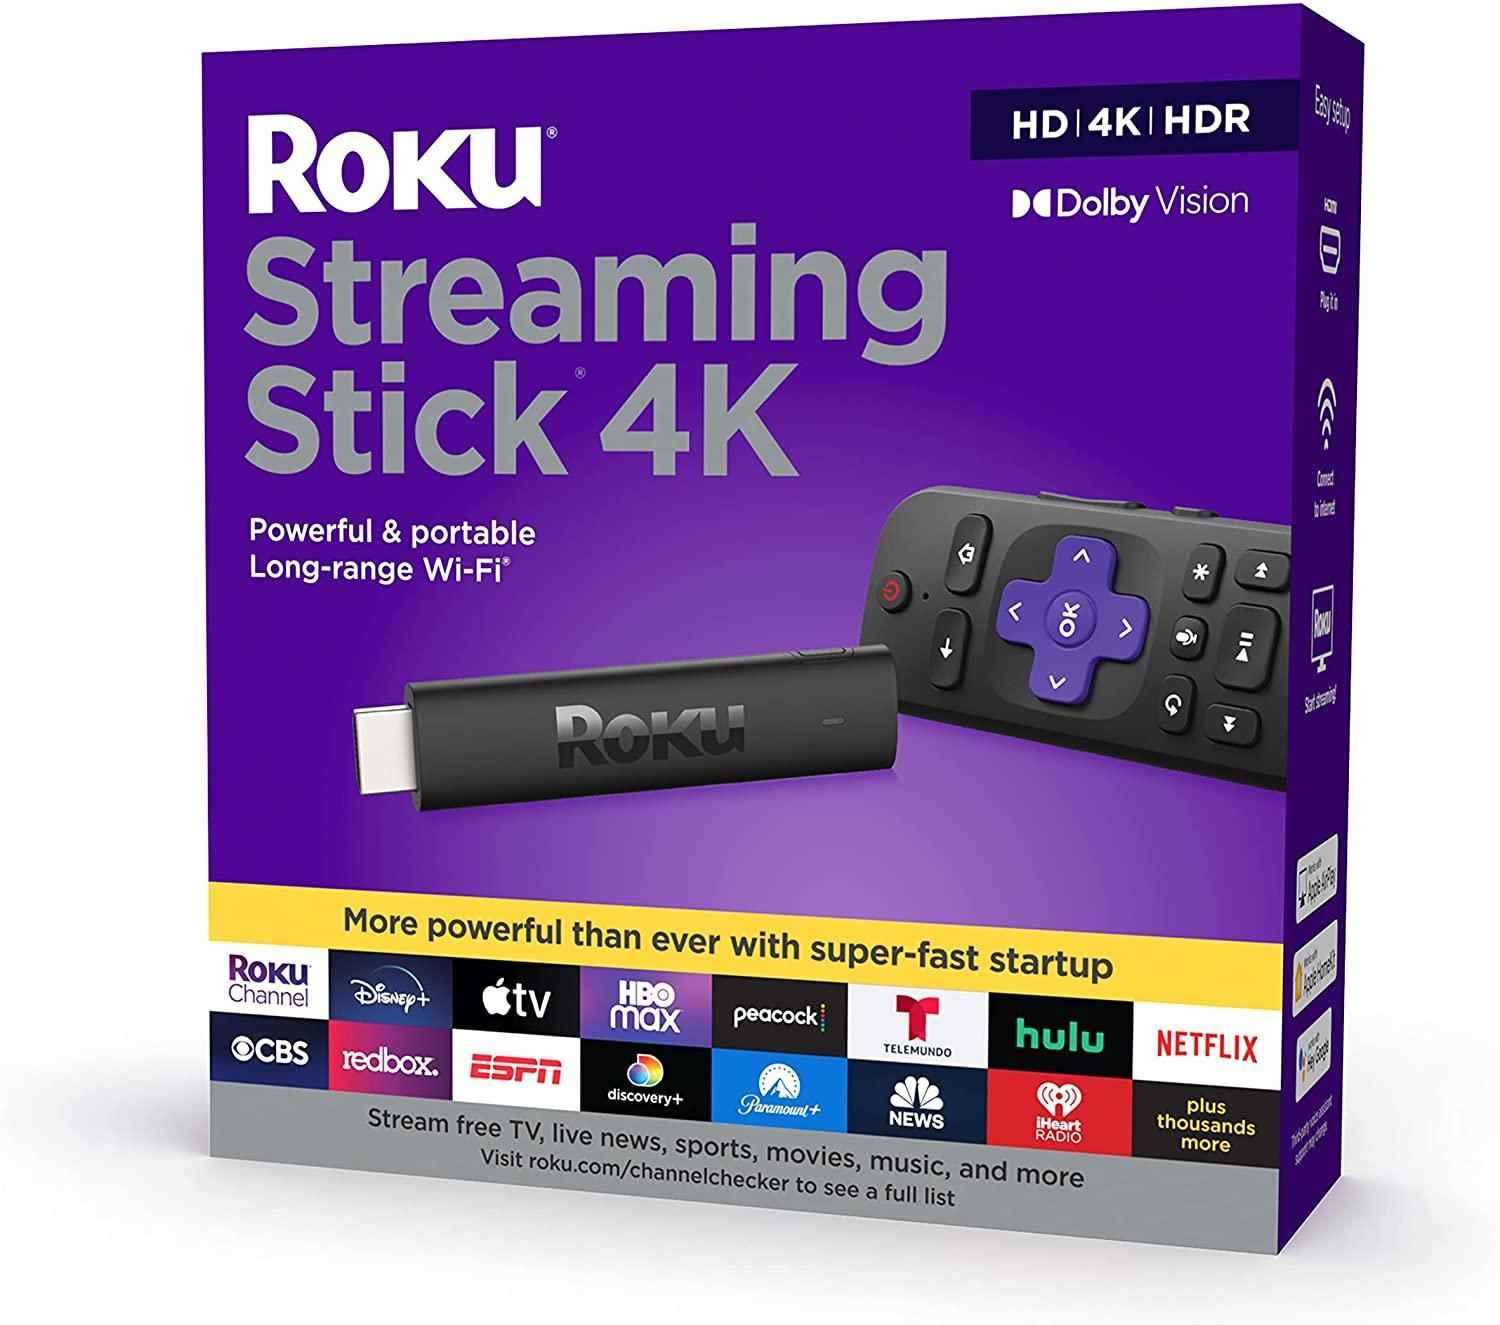 Imagen de la caja del producto Roku Streaming Stick 4K